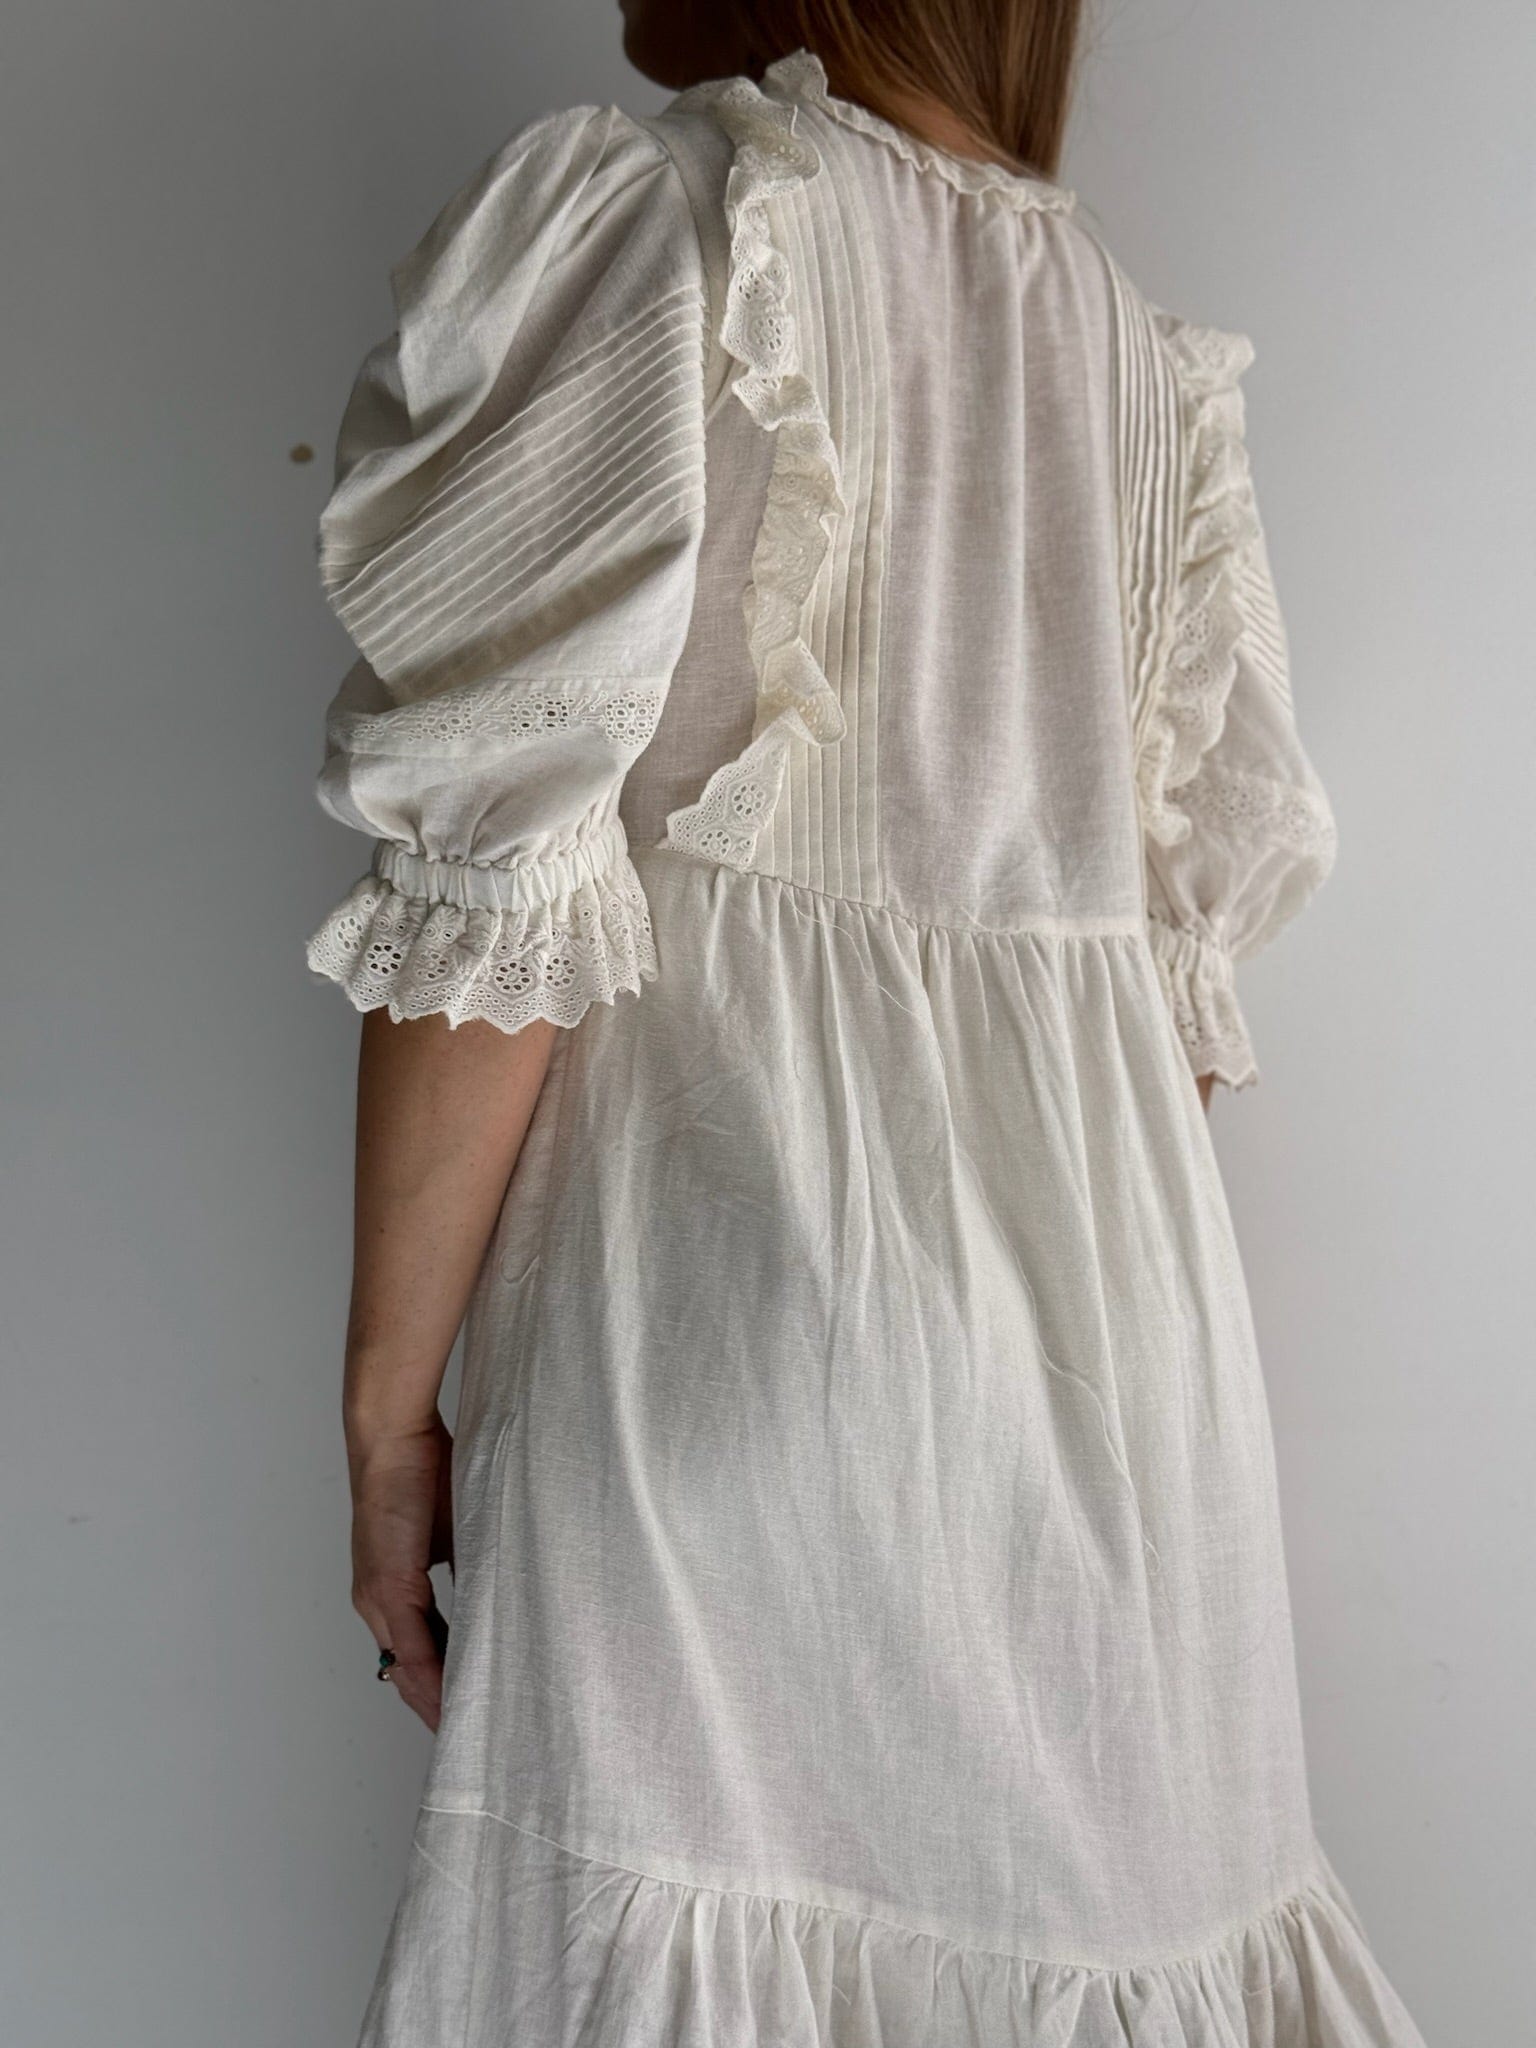 Sistergolden High Priestess Ivory Lace Dress